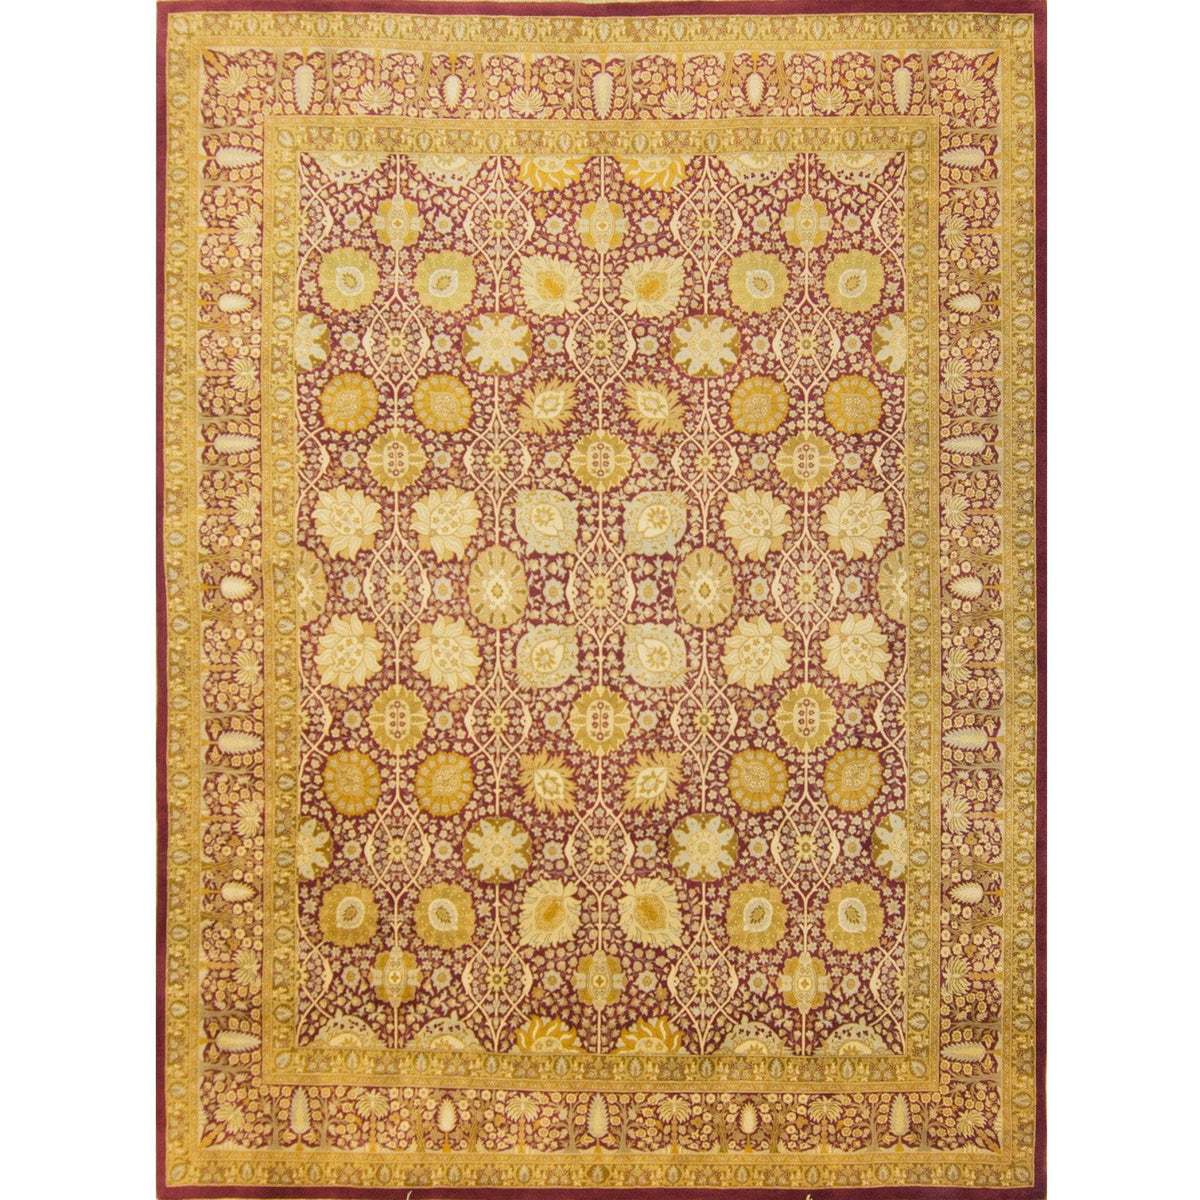 Find Hand-knotted Wool Kashan Design Rug 244cm x 310cm